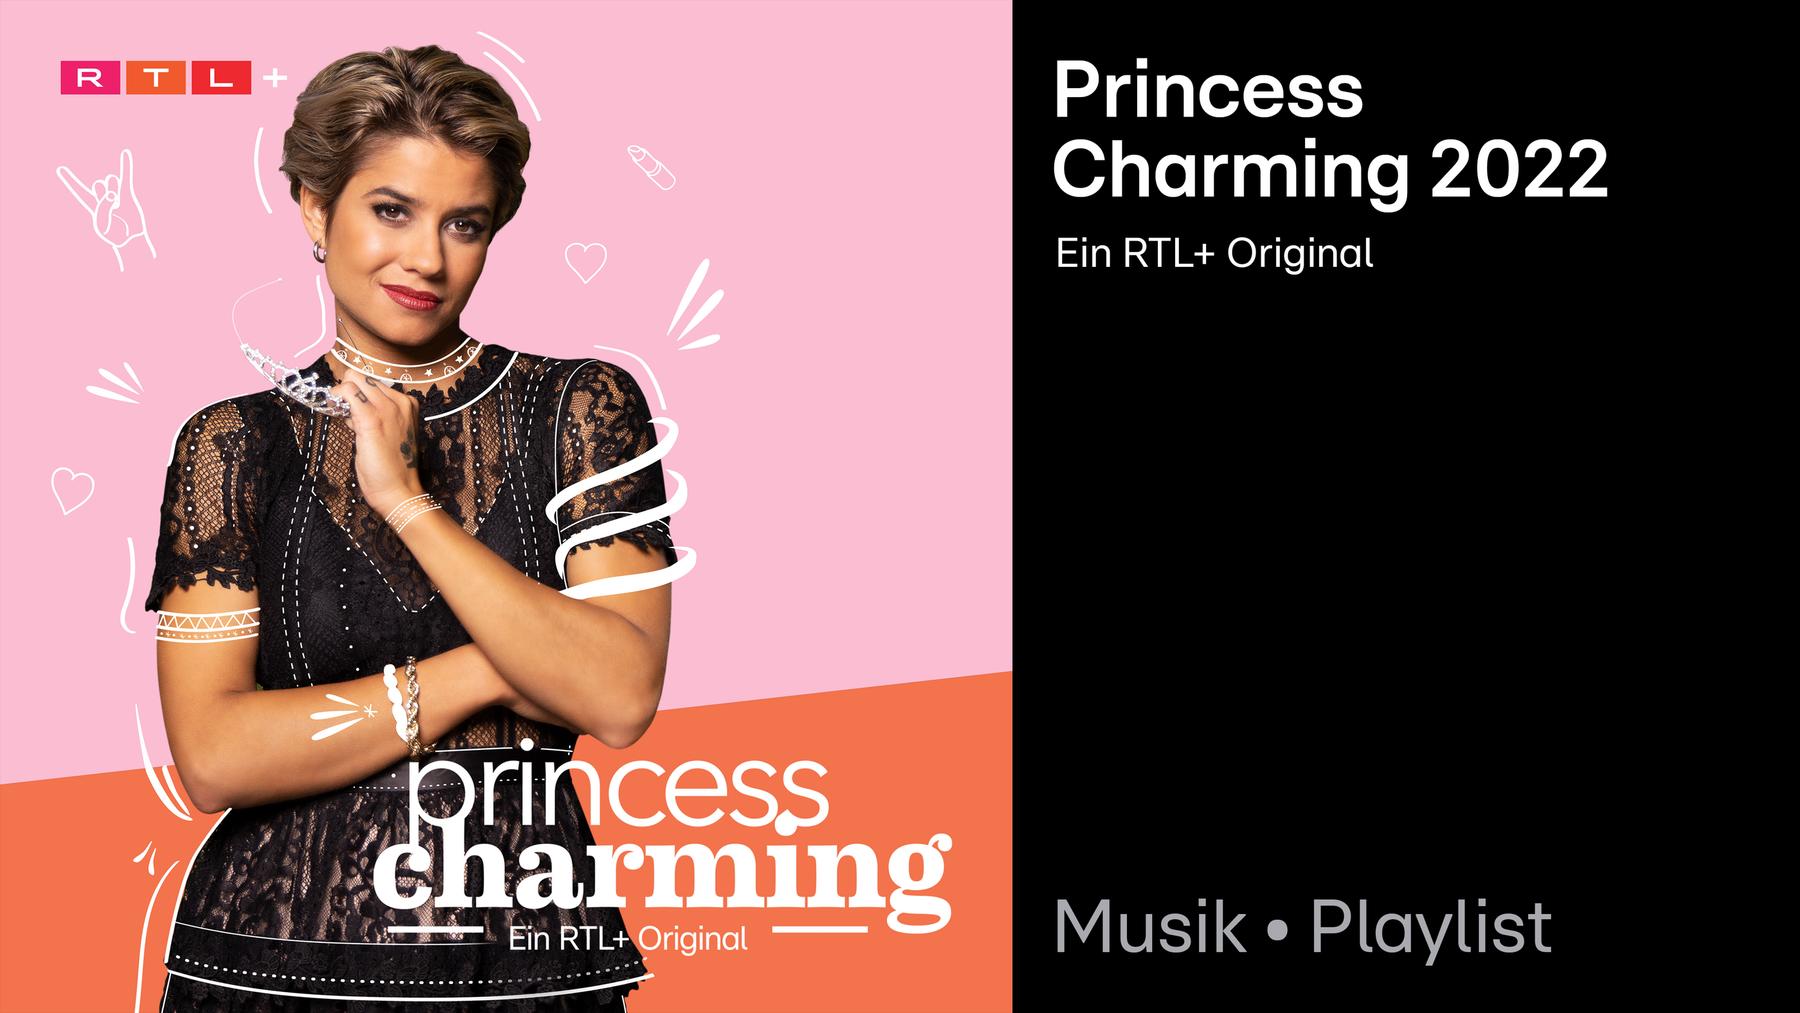 Princess Charming 2022 Playlist